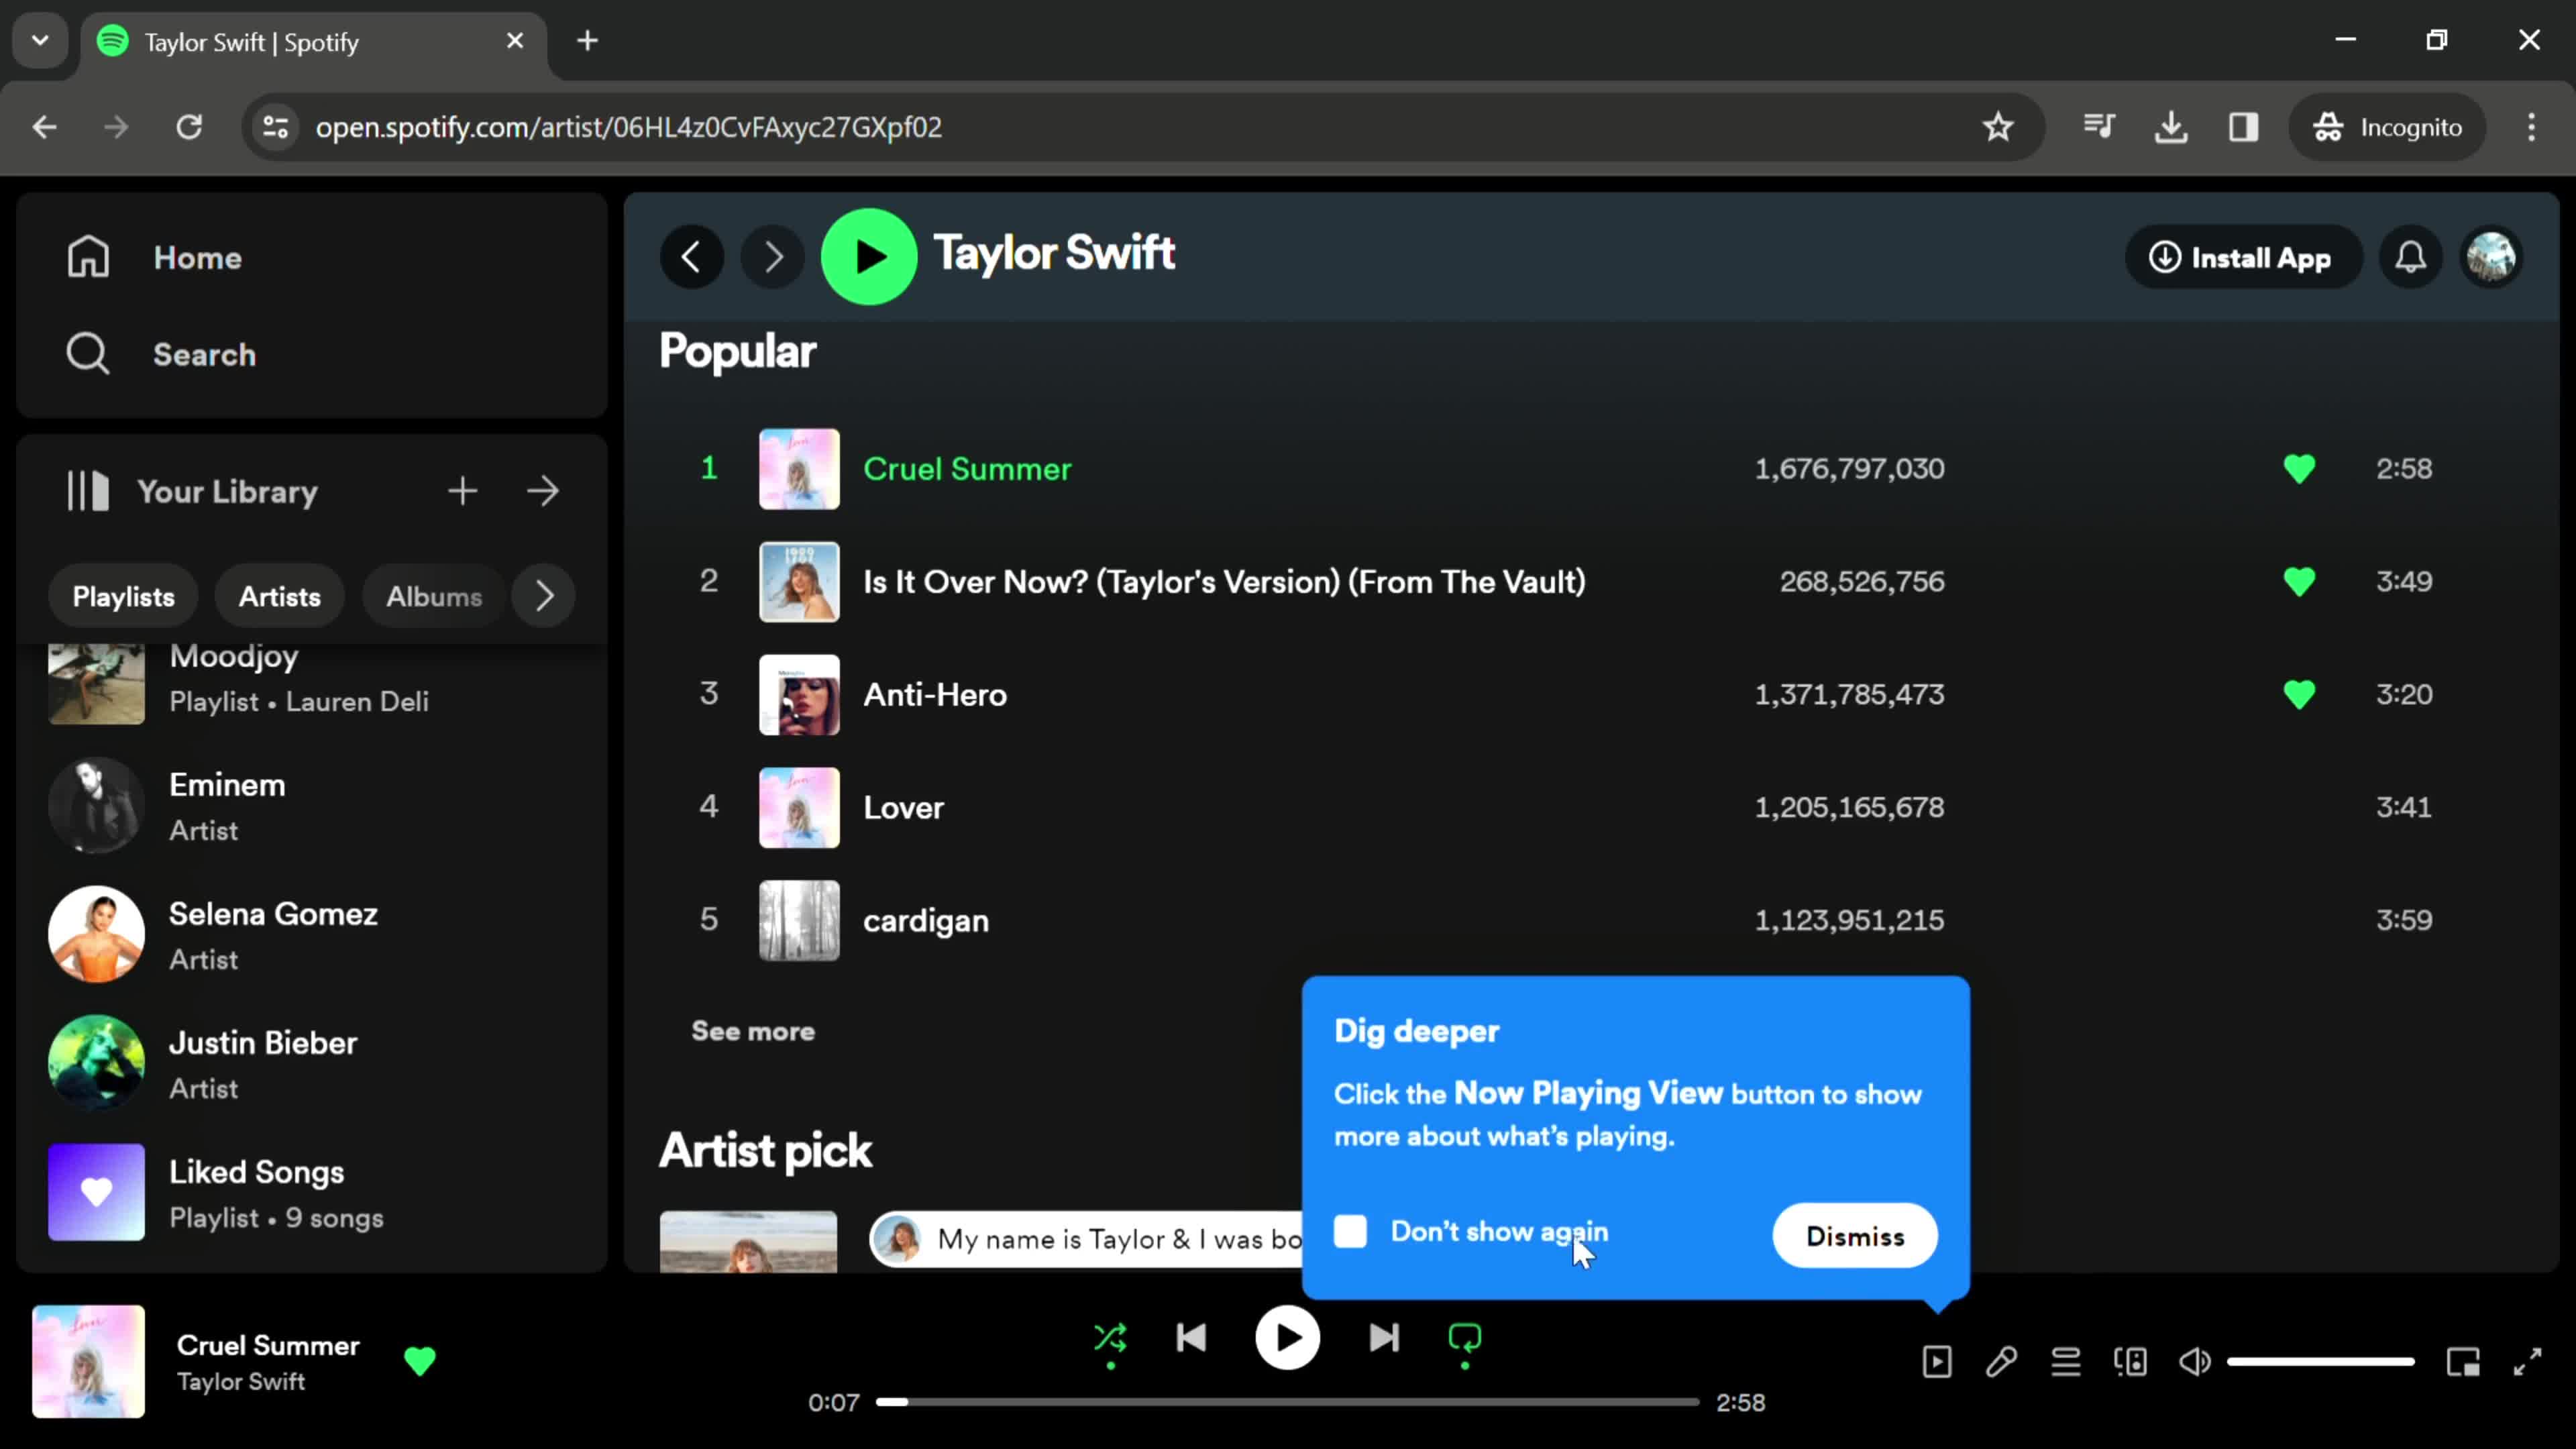 Spotify guide popover screenshot